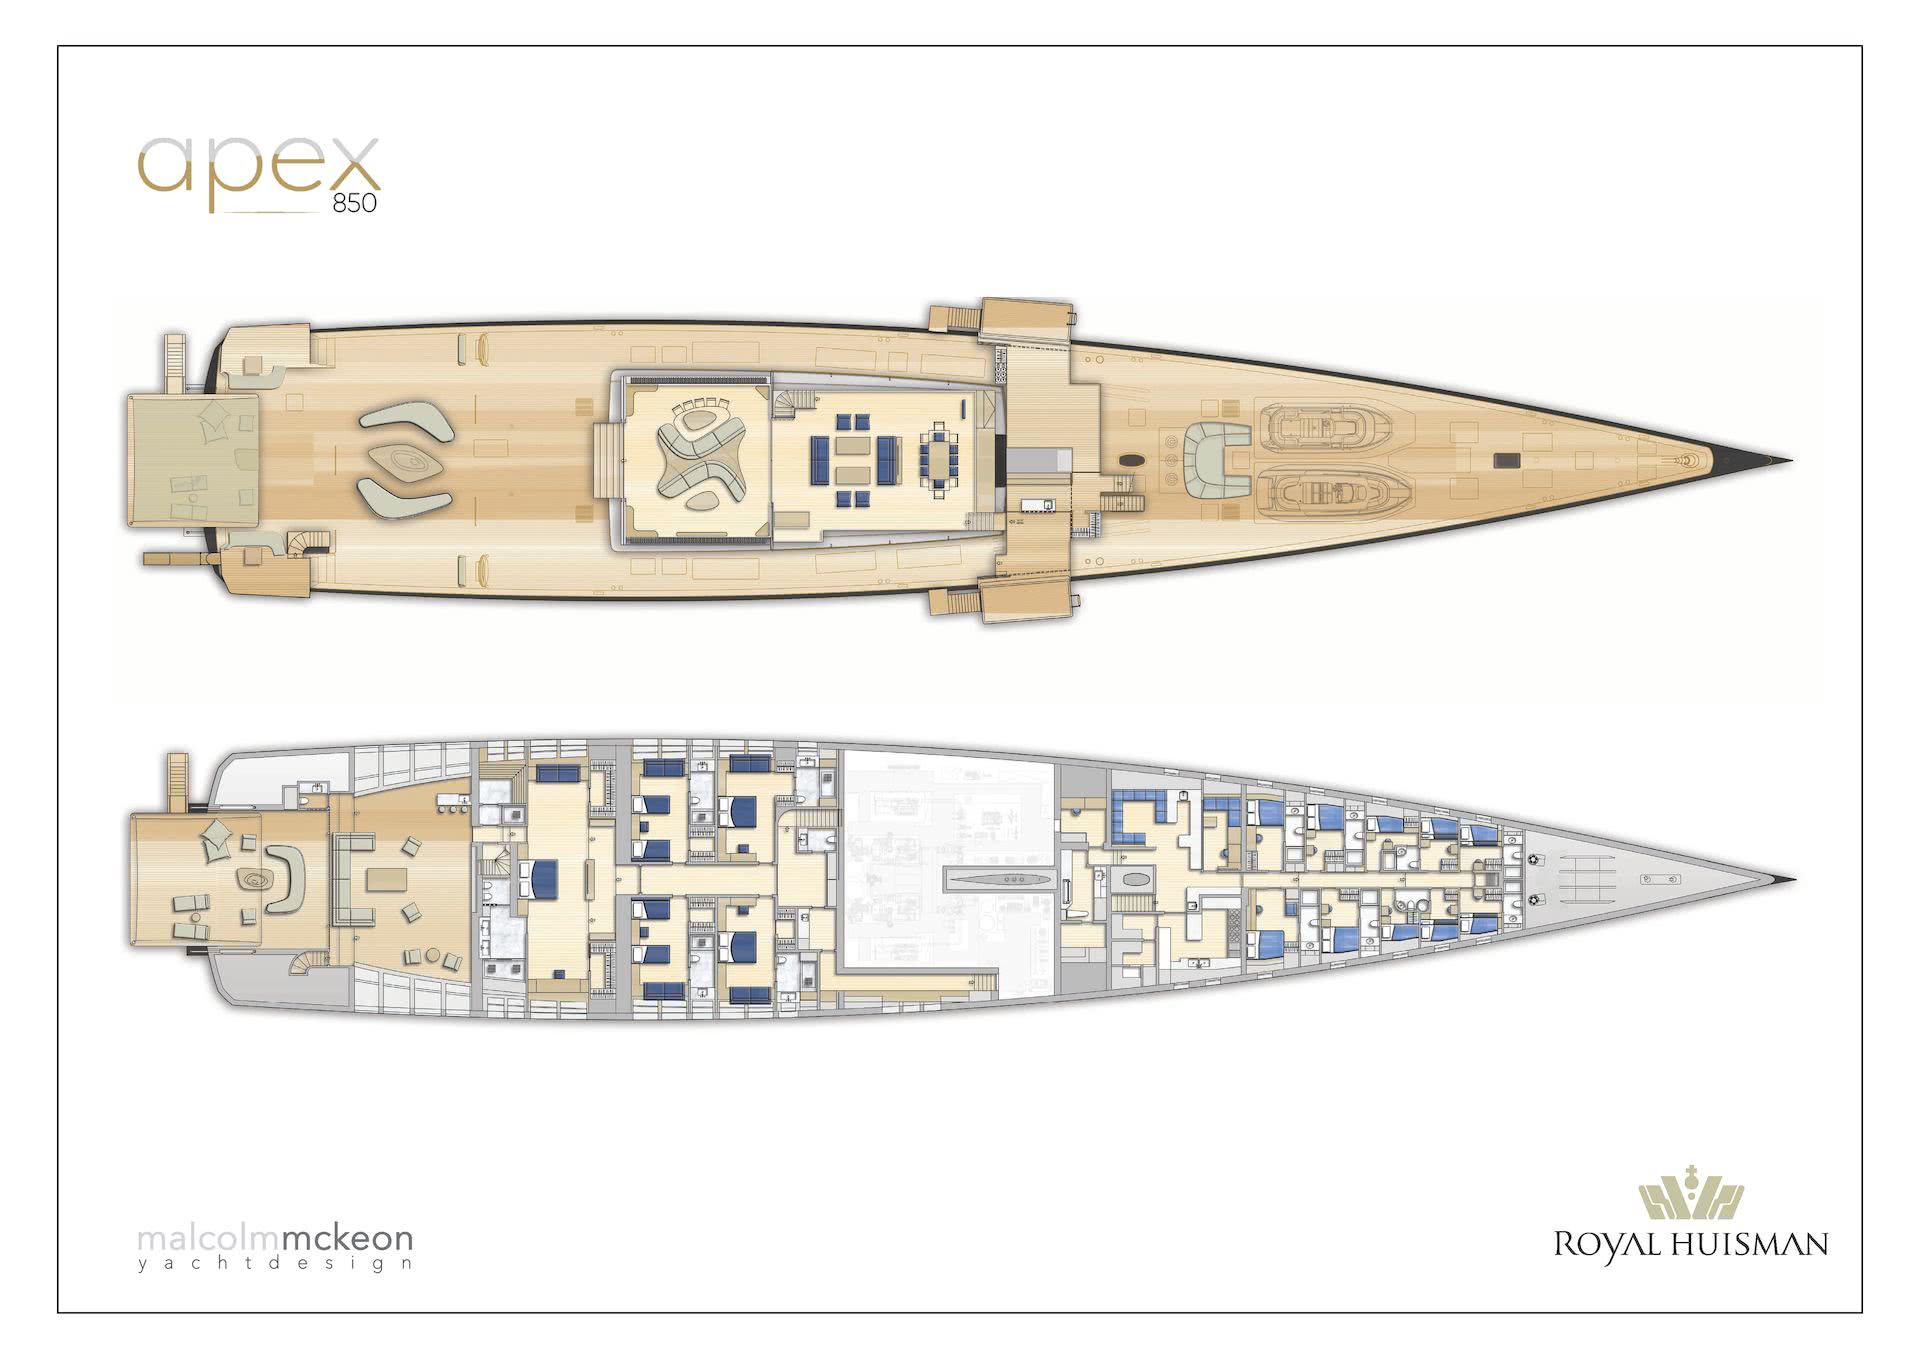 Apex 850 Royal Huisman Malcolm McKeon Yacht Design